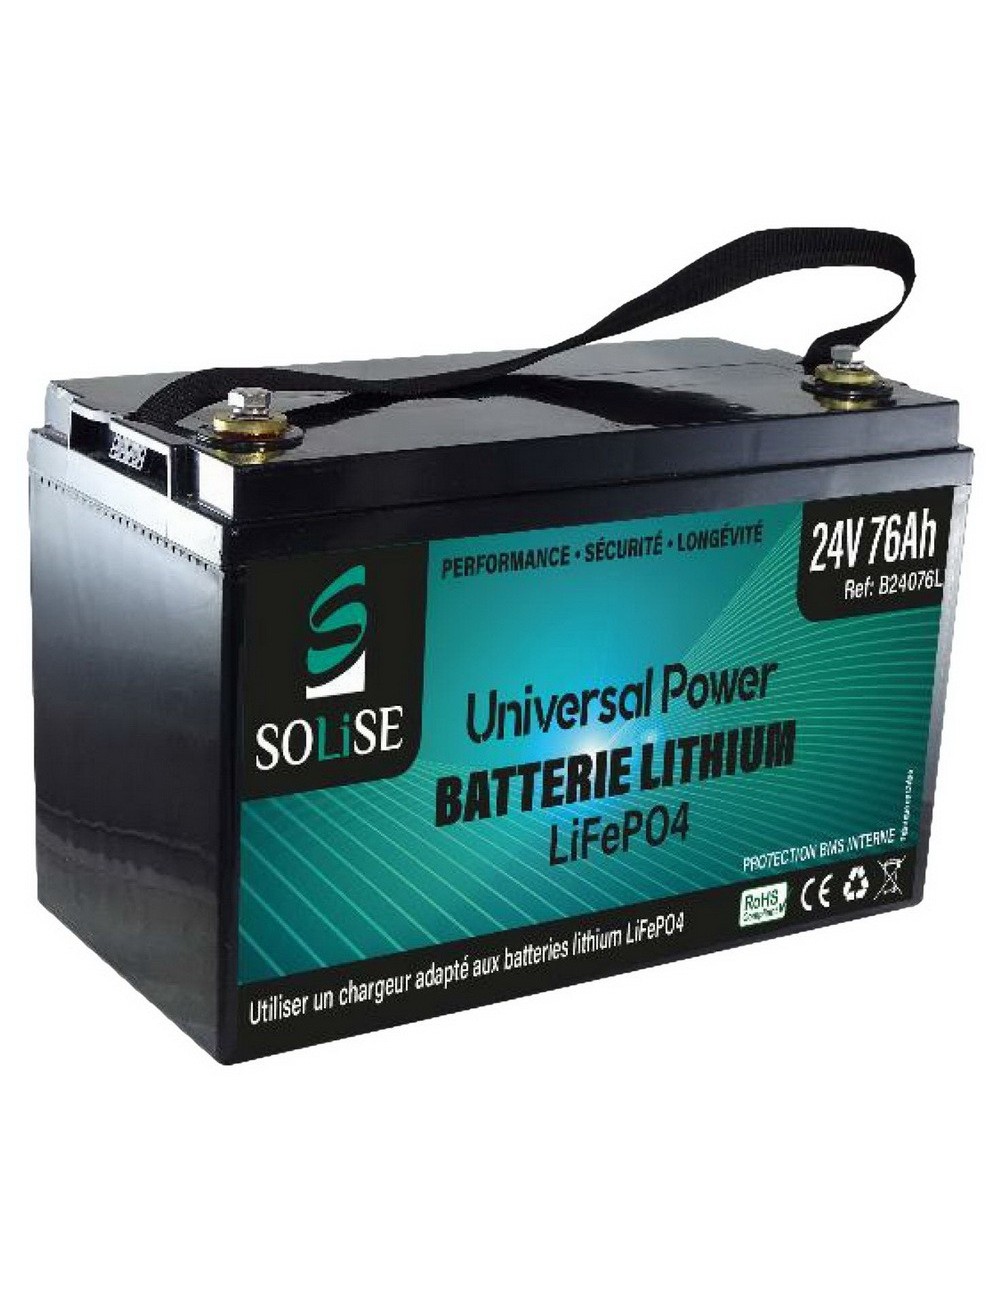 RNS B24076L (B24076L) LiFePO4 Battery 24V Solise (24V - 76Ah